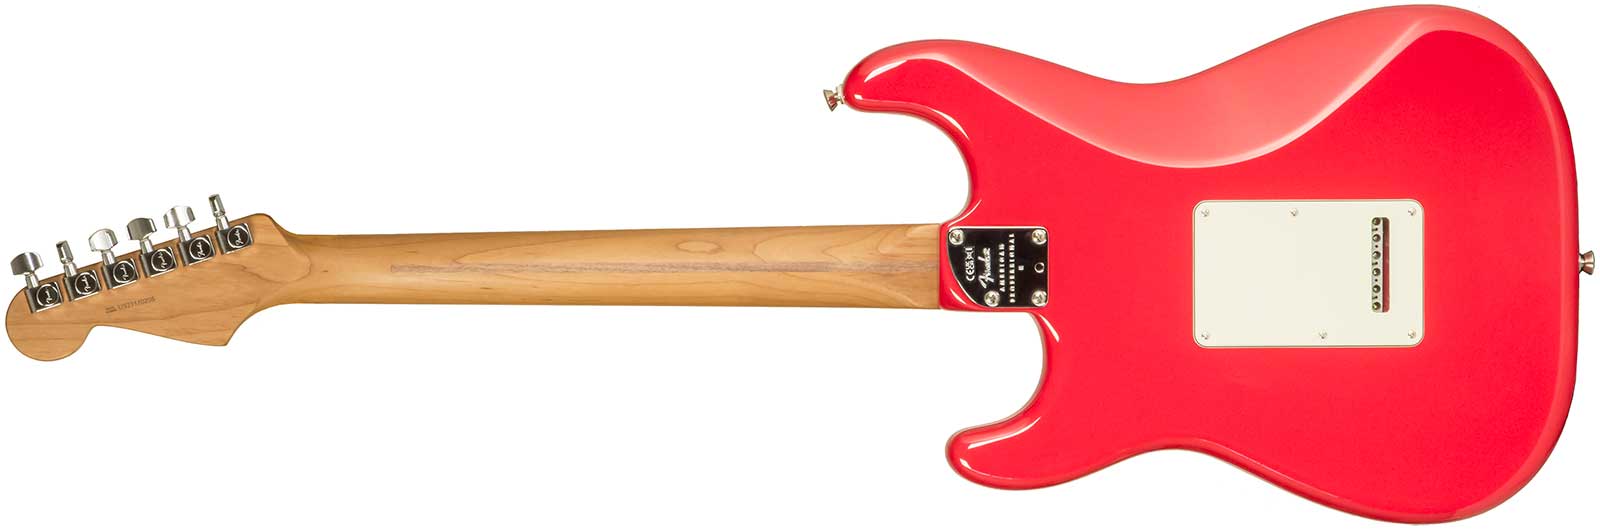 Fender Strat American Professional Ii Ltd Usa 3s Trem Rw - Fiesta Red - Guitarra eléctrica con forma de str. - Variation 4